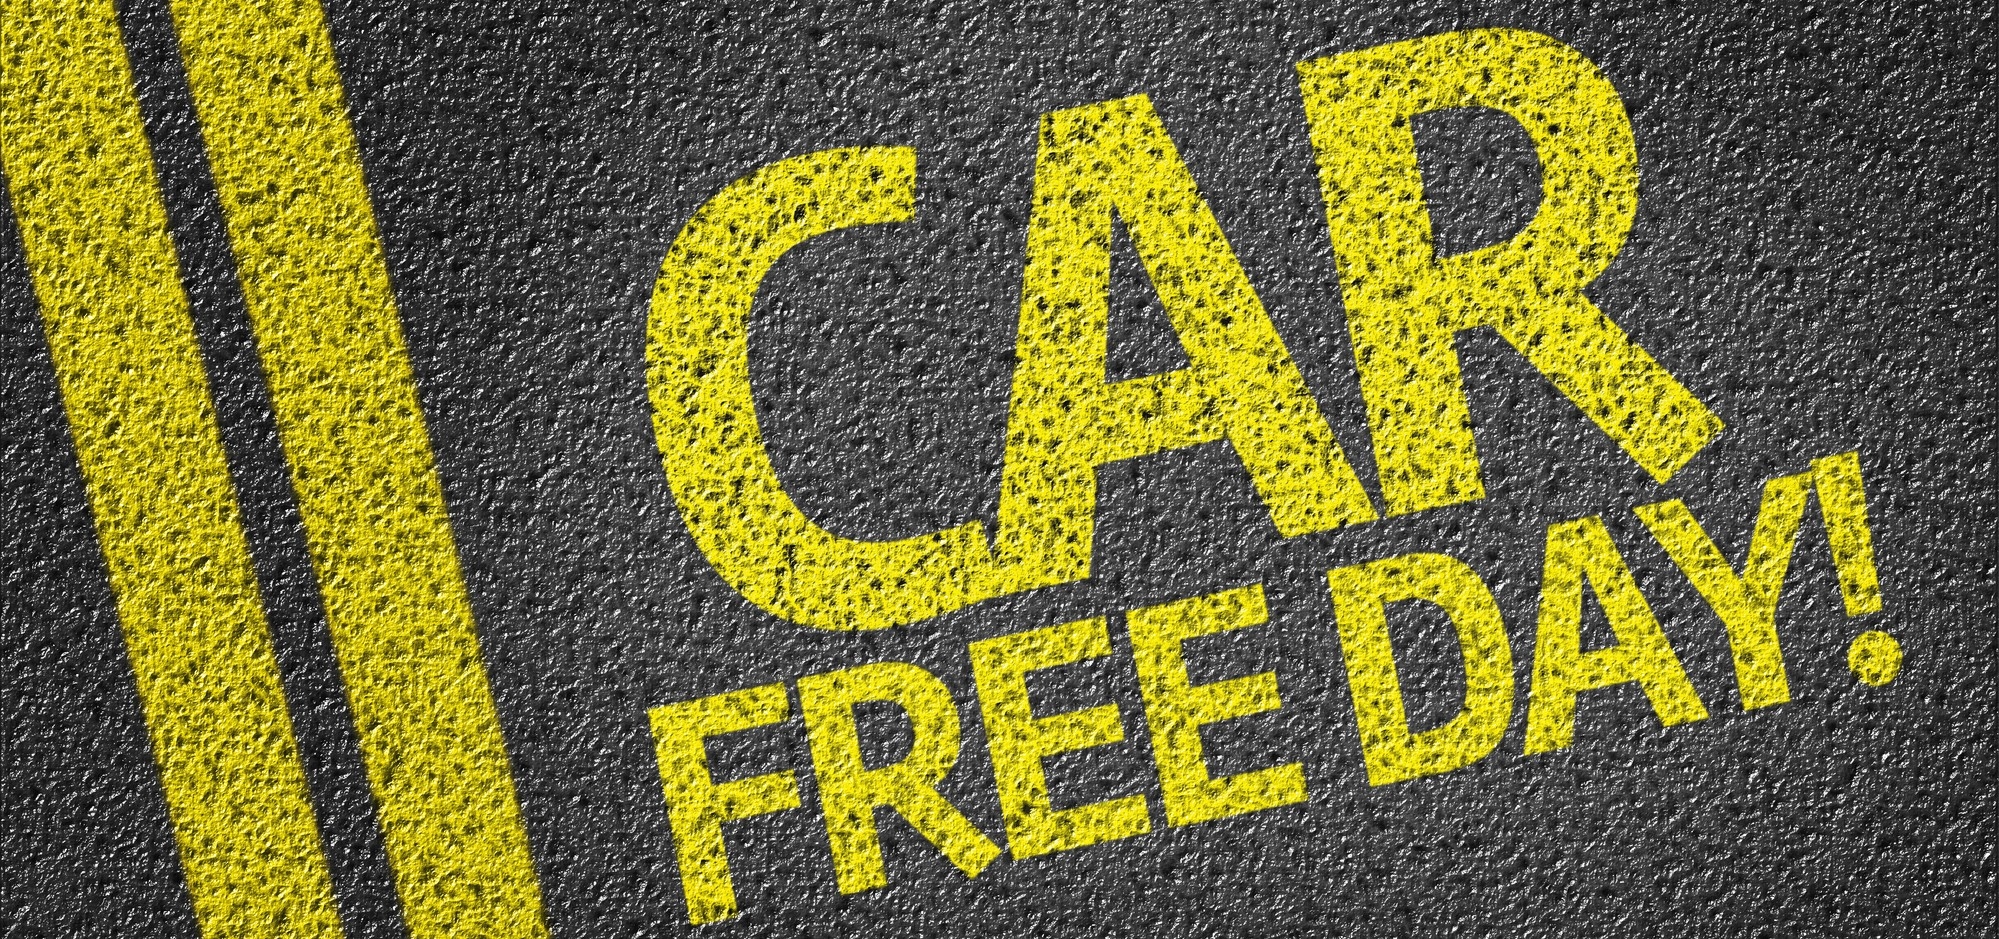 Car Free Days, la settimana dei mezzi alternativi